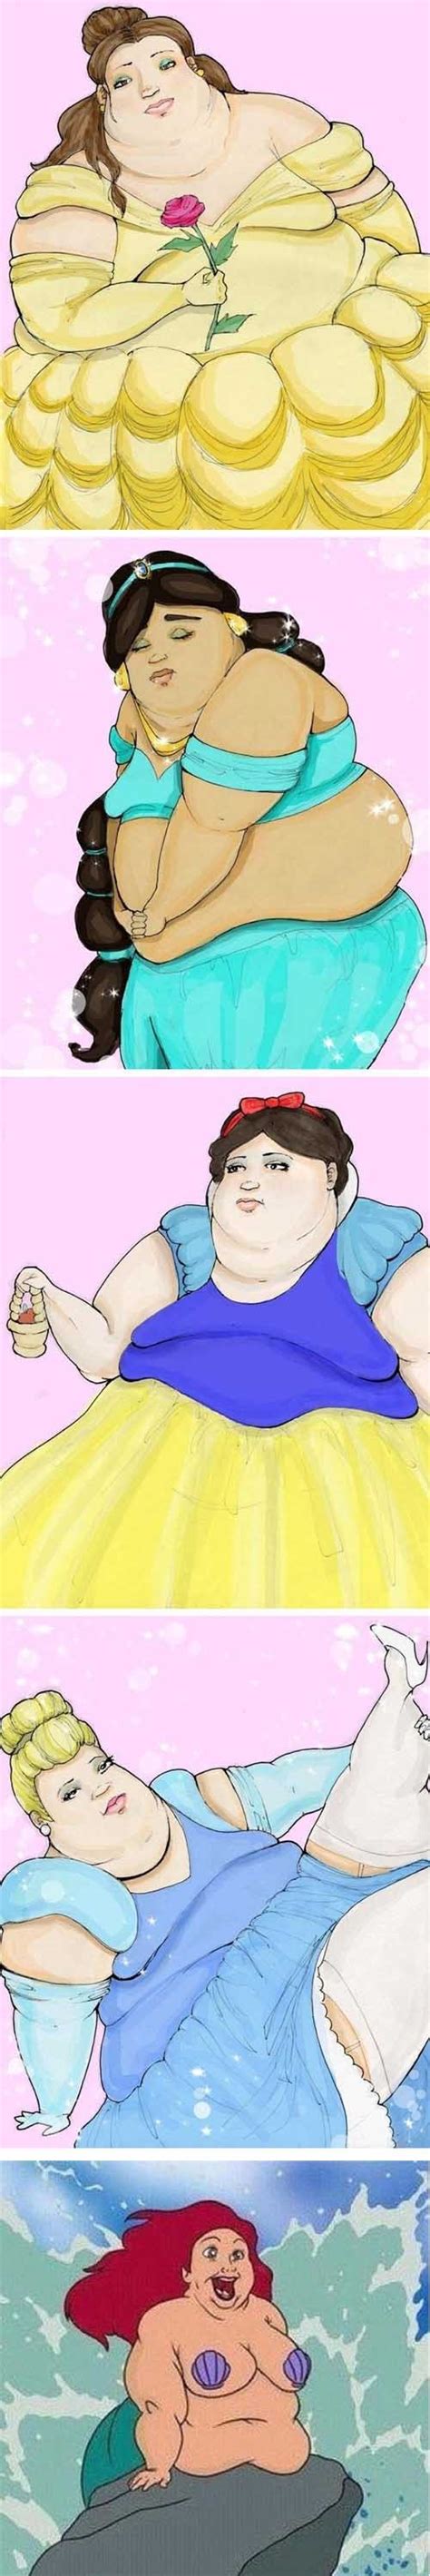 If Disney Princesses Were Fat